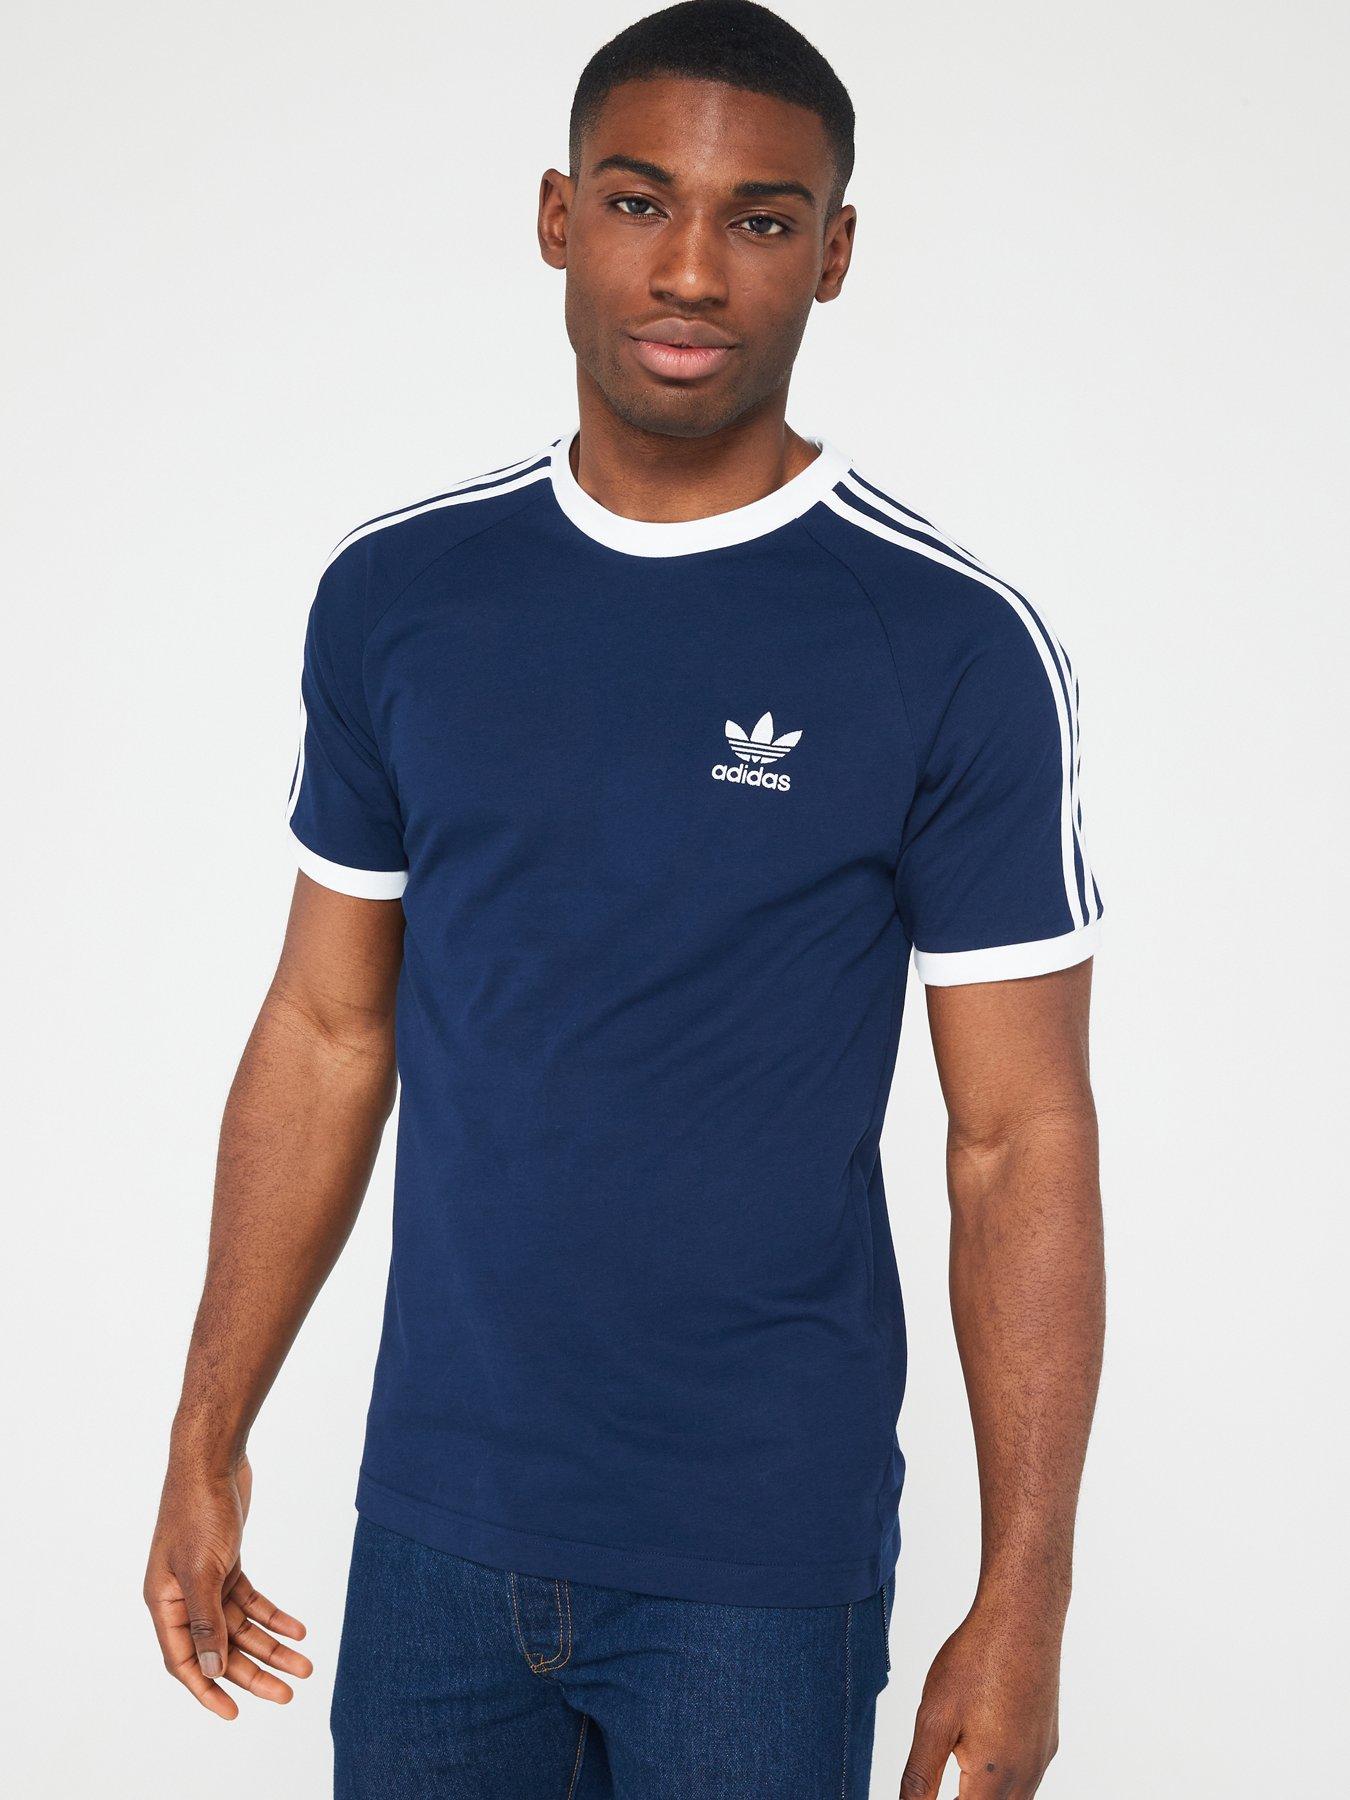 adidas Originals Men's 3-Stripes T-Shirt - Navy